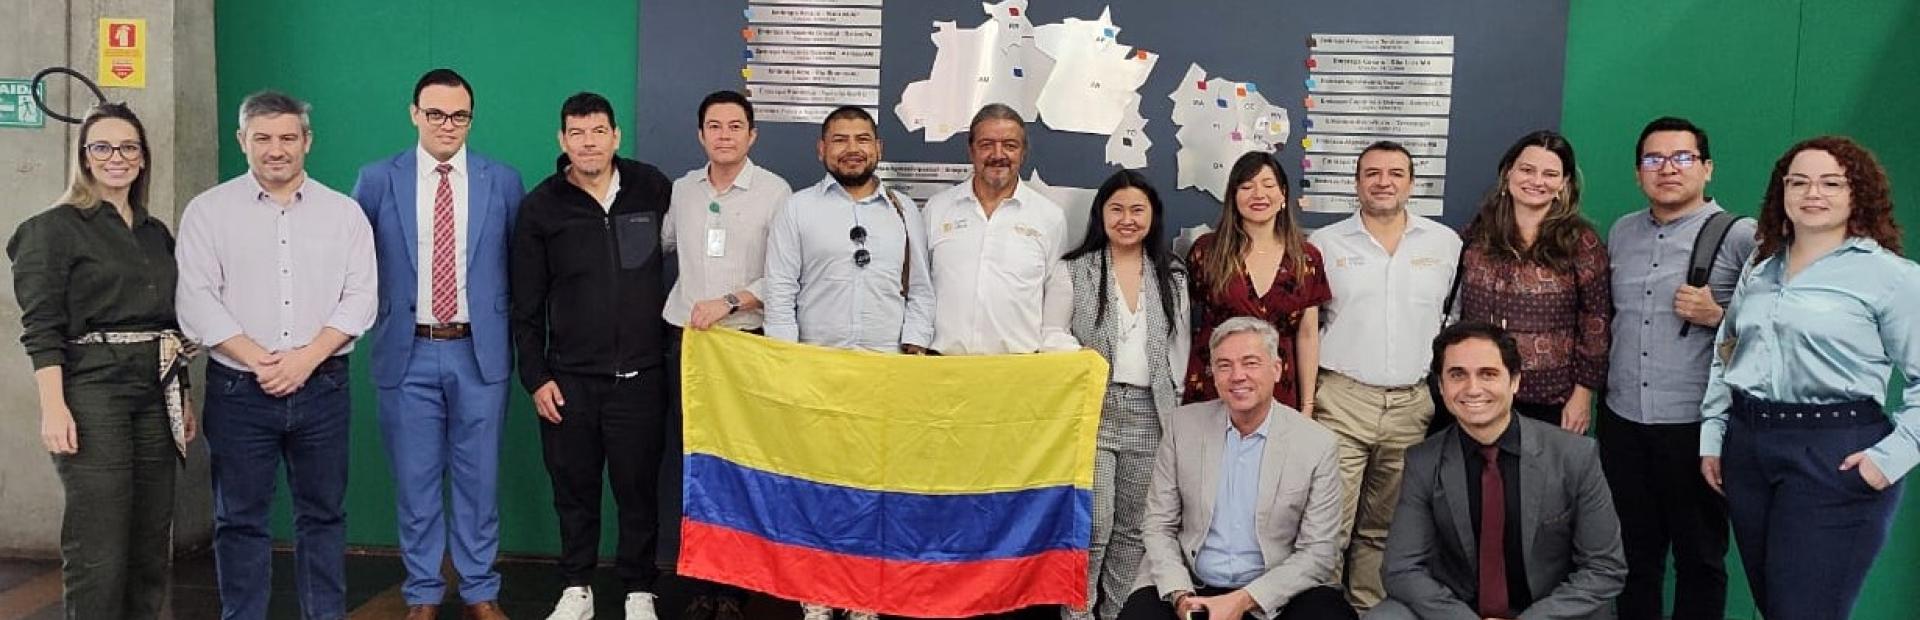 Missão Colômbia na Embrapa